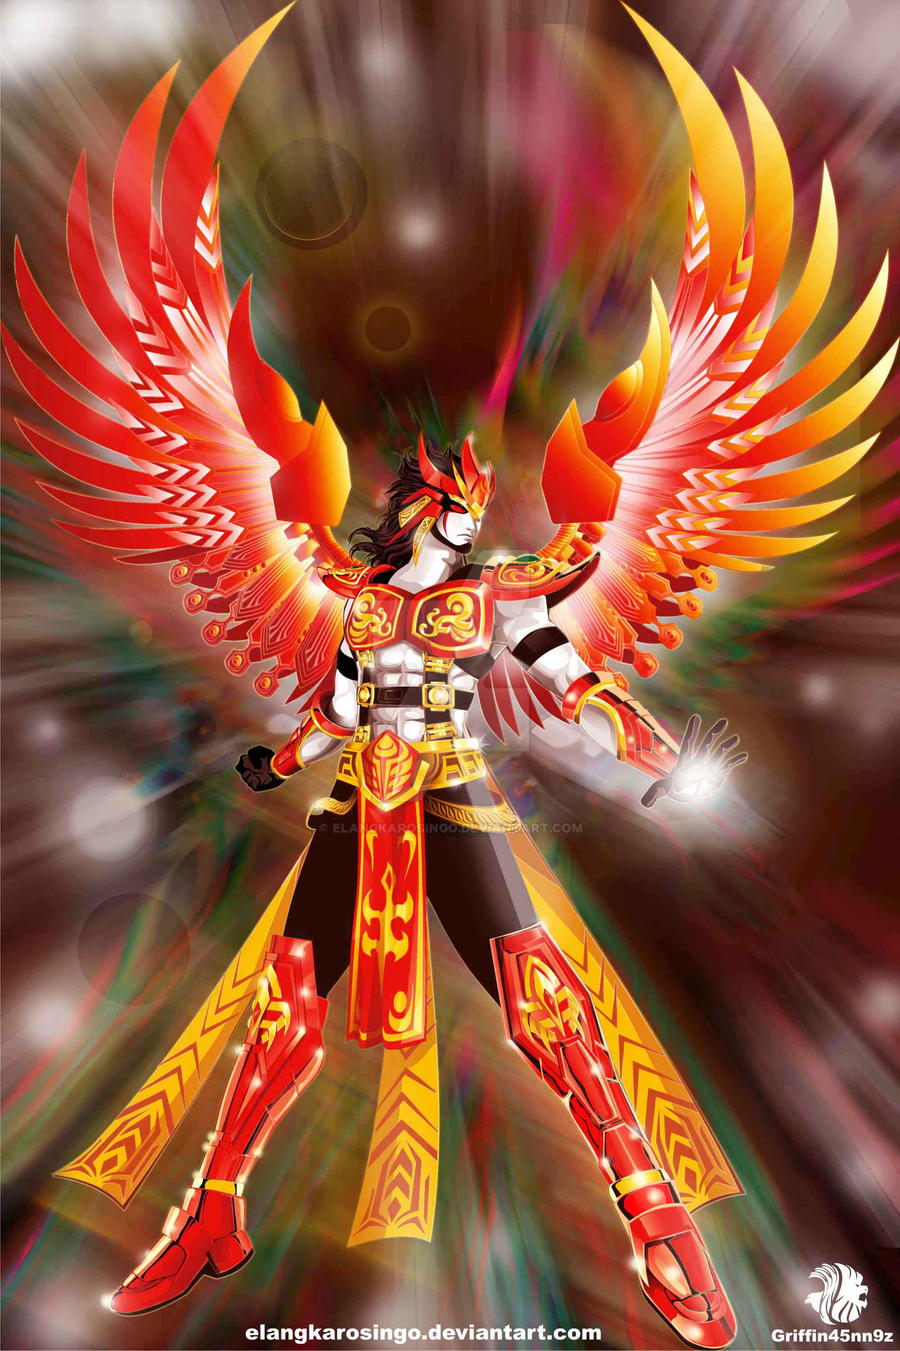 new phoenix resurrection by elangkarosingo